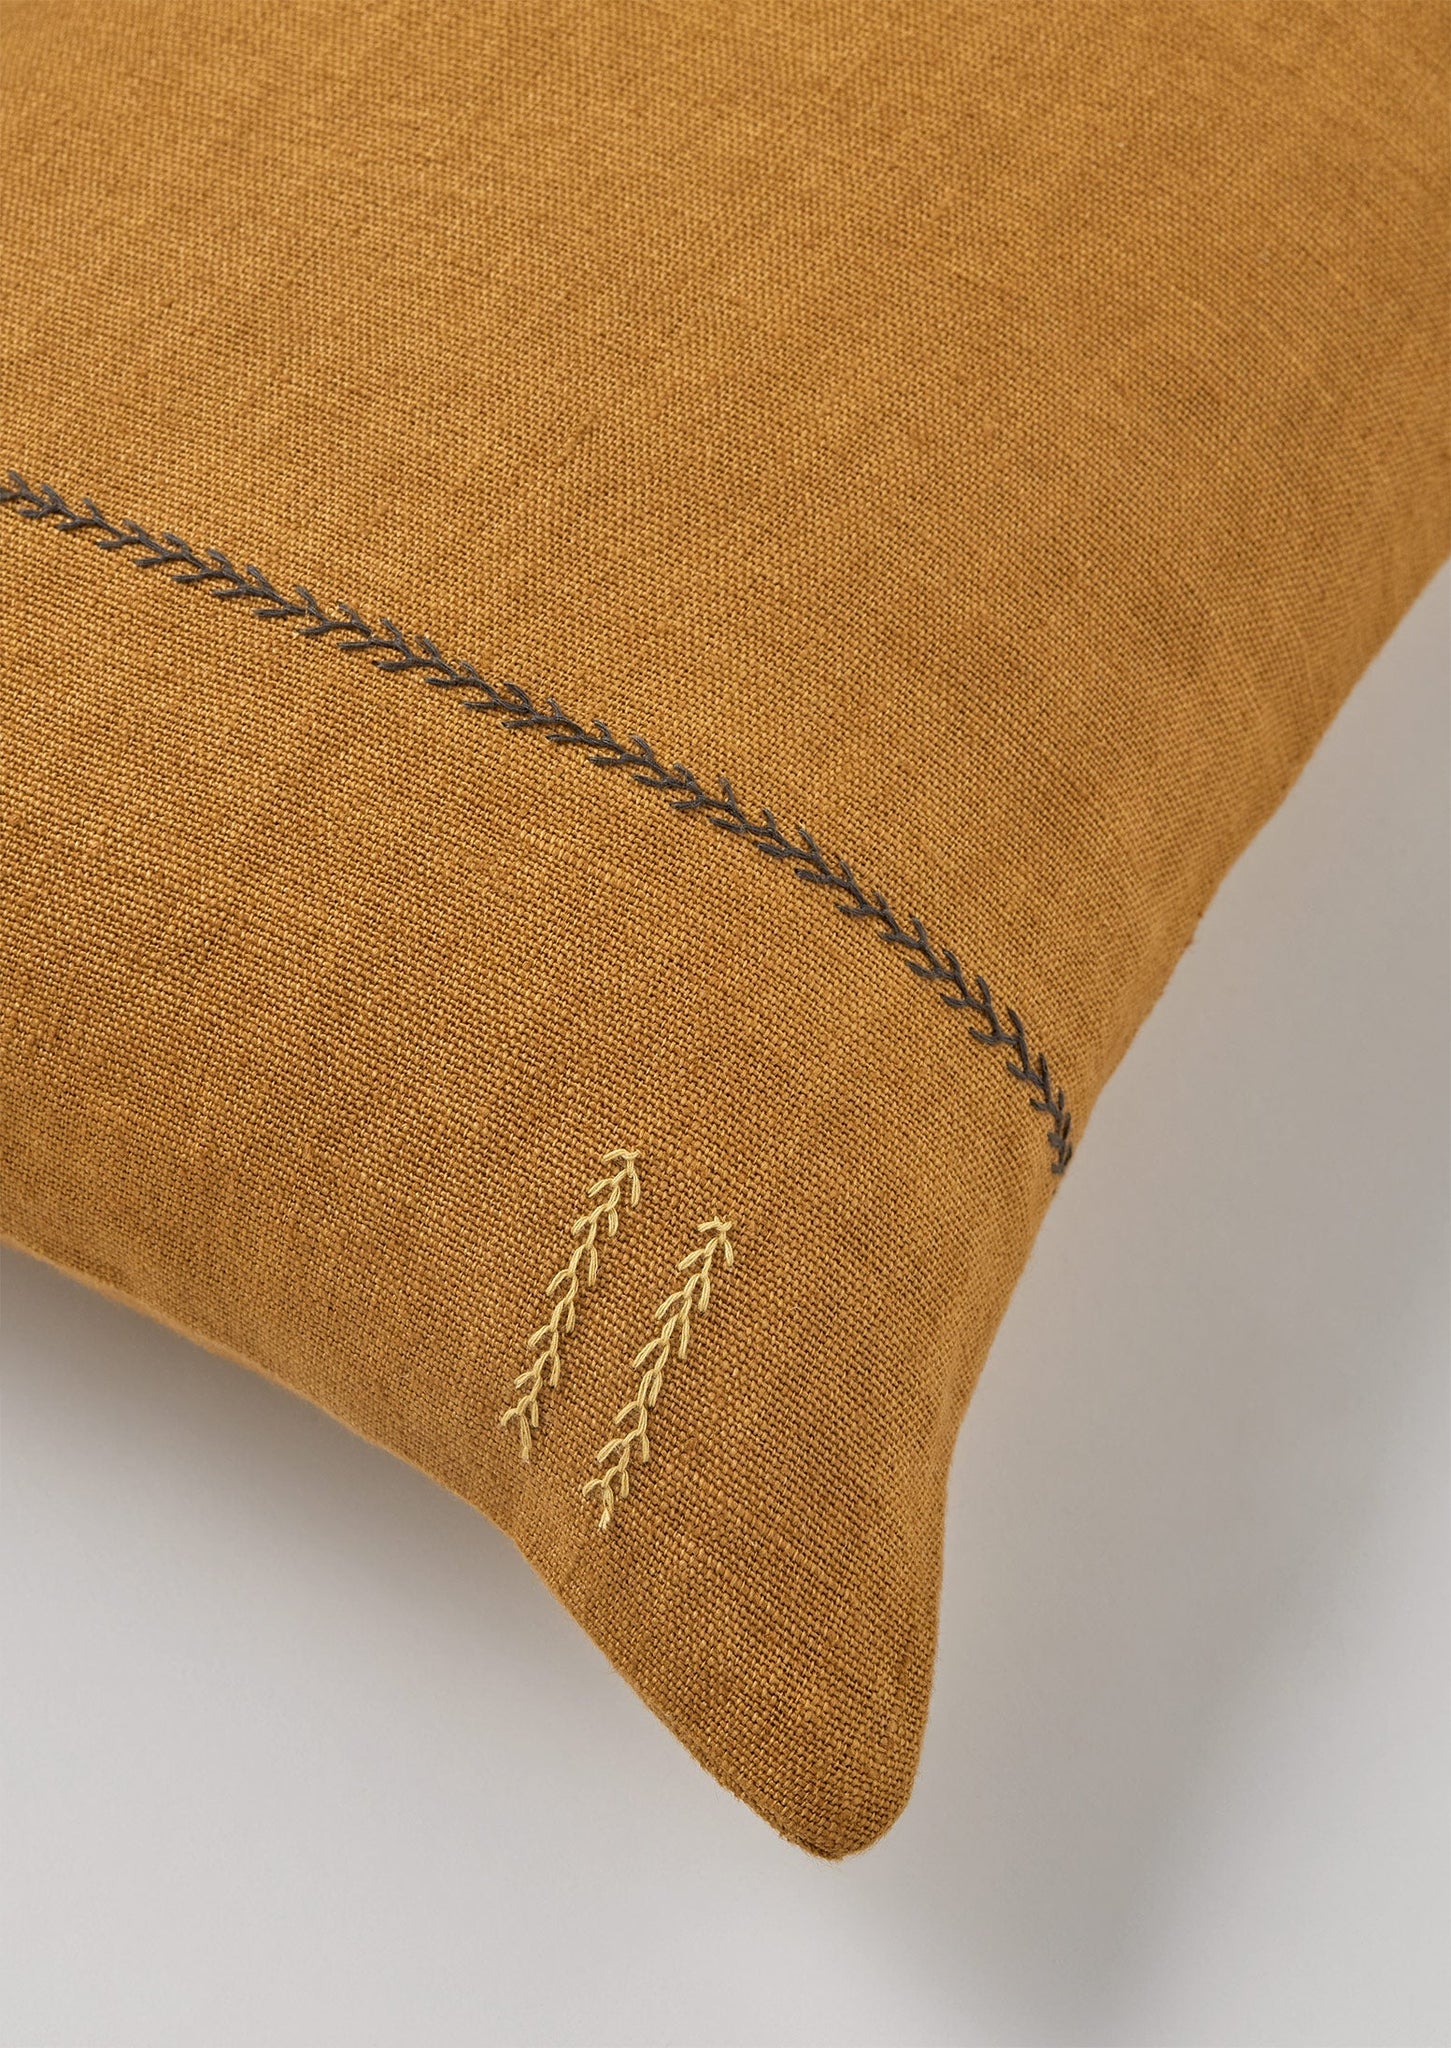 Rectangular Herringbone Embroidered Cushion Cover | Caramel